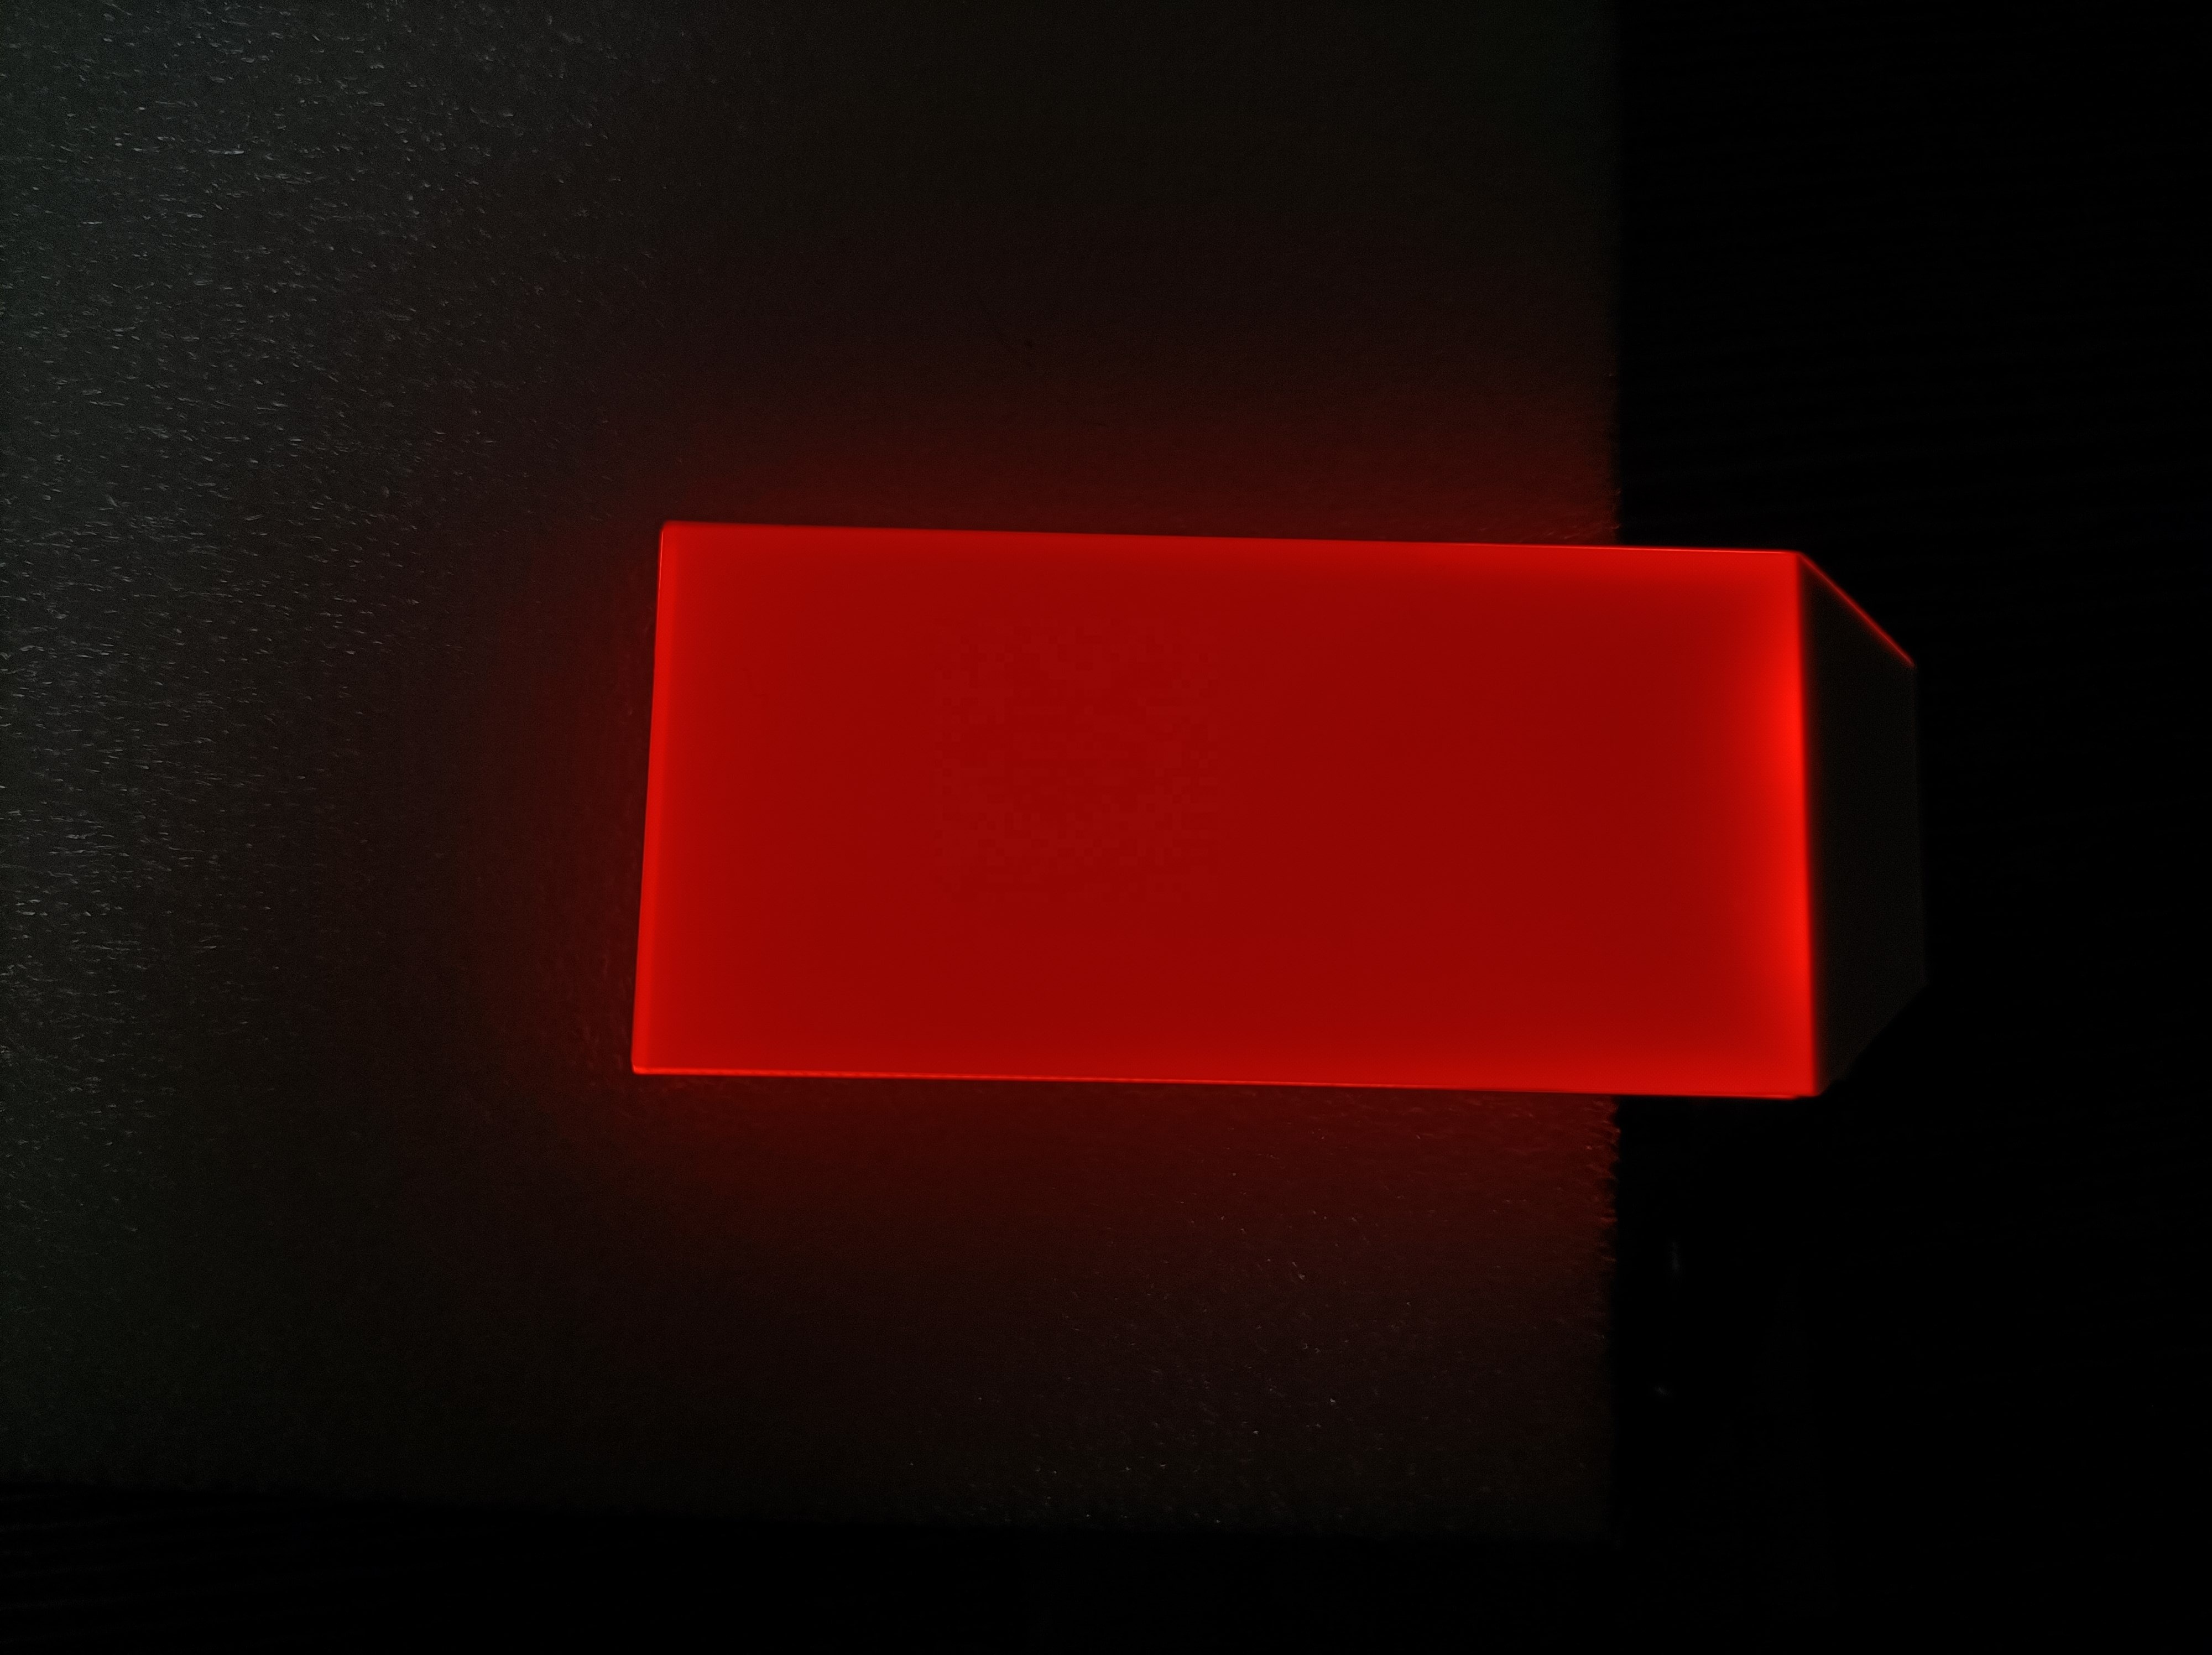 RGB LCD backlight